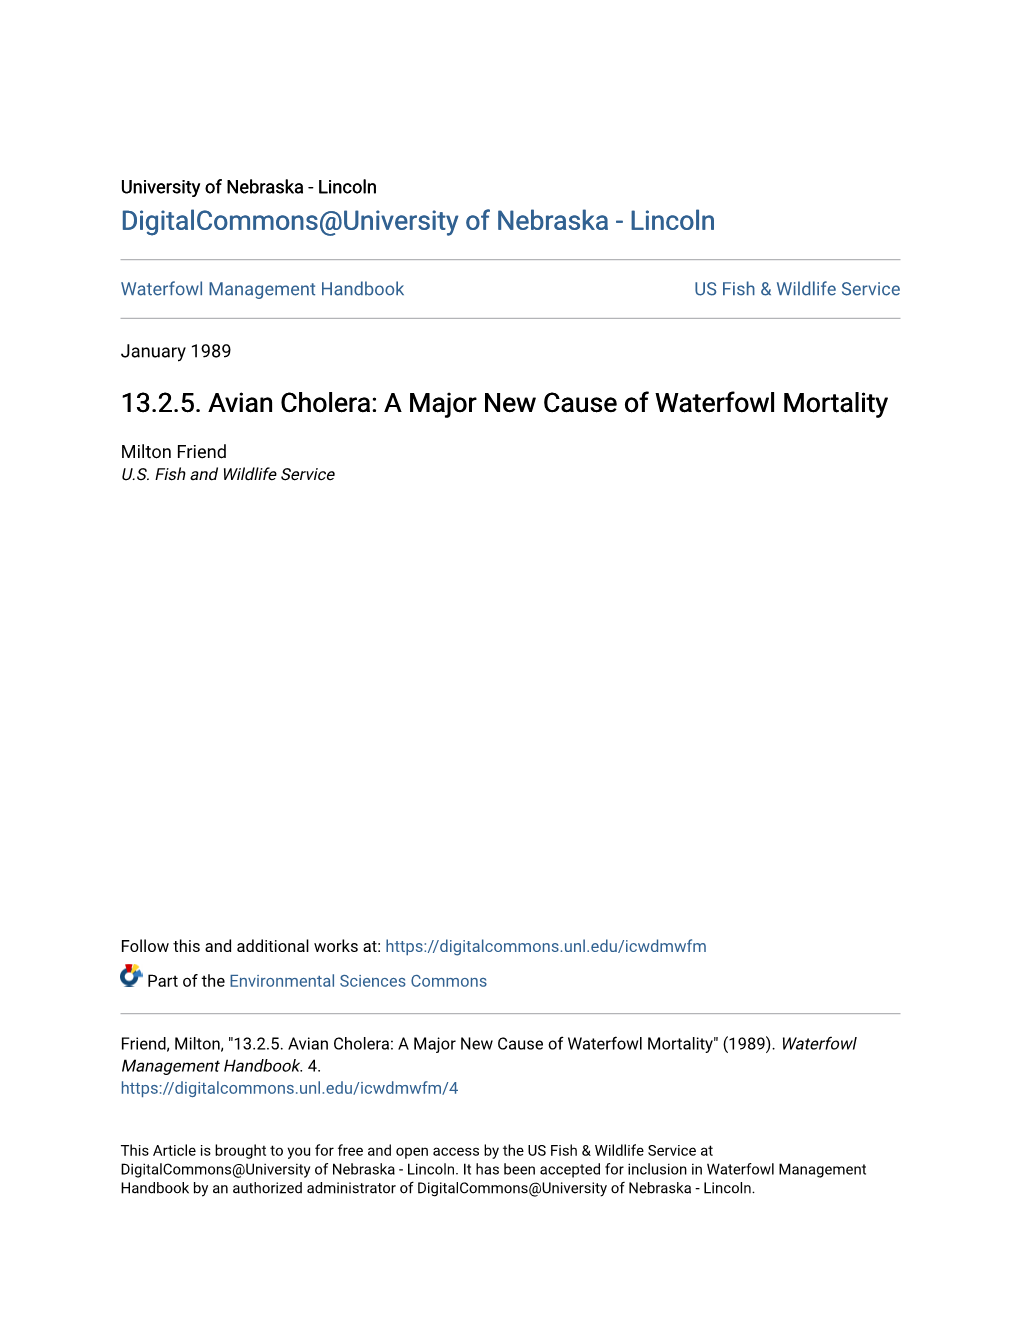 13.2.5. Avian Cholera: a Major New Cause of Waterfowl Mortality